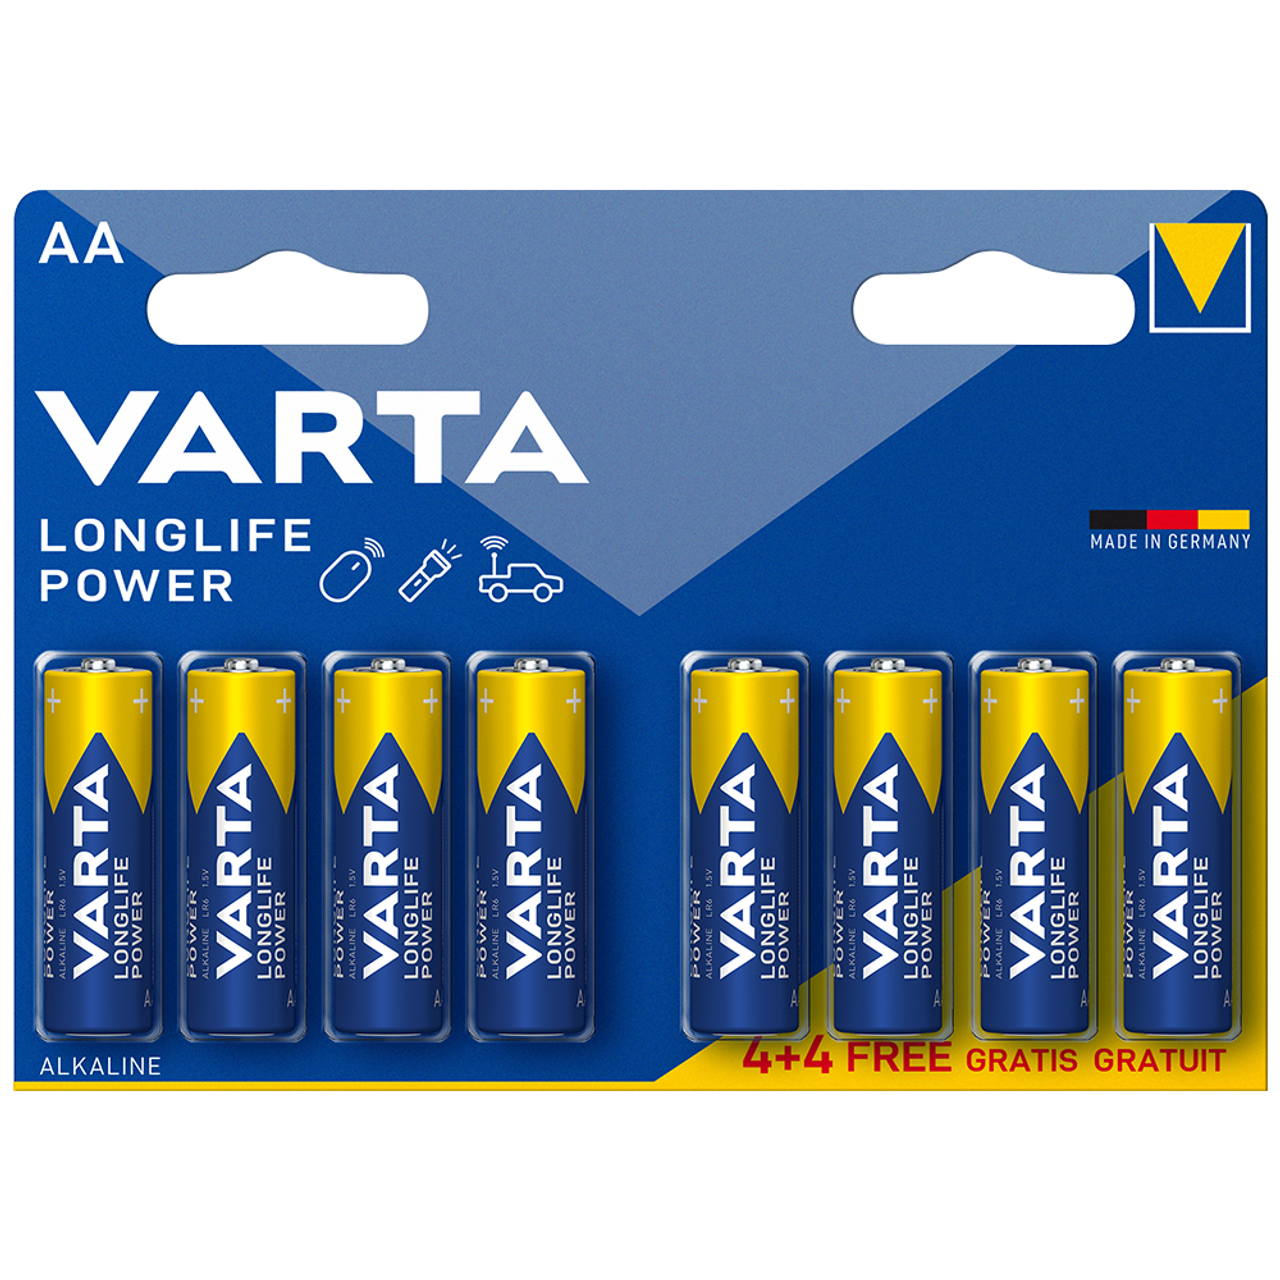 VARTA Longlife Power Battery